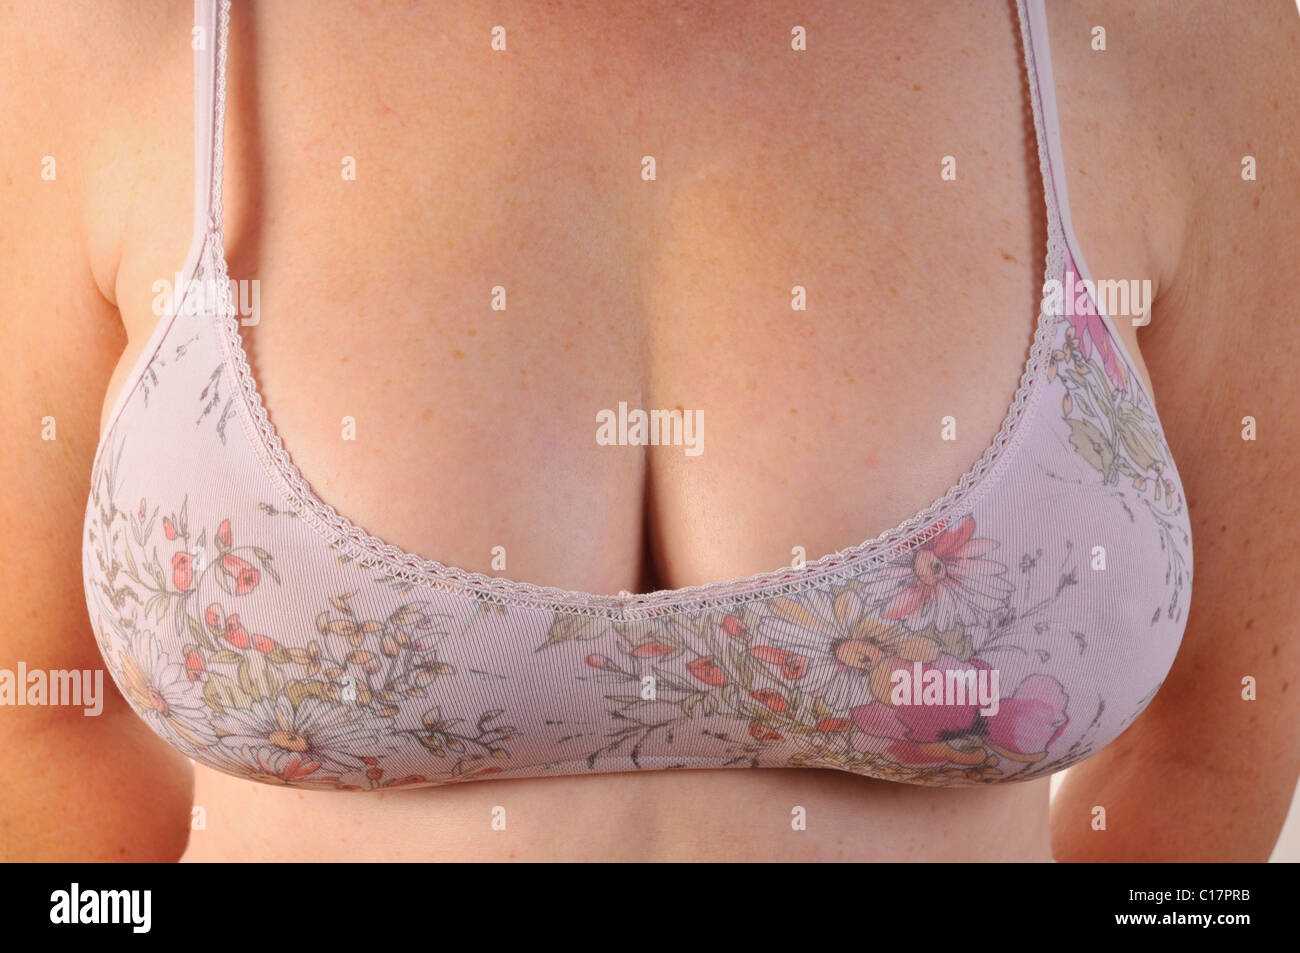 https://c8.alamy.com/comp/C17PRB/woman-wearing-a-badly-fitting-too-small-bra-C17PRB.jpg